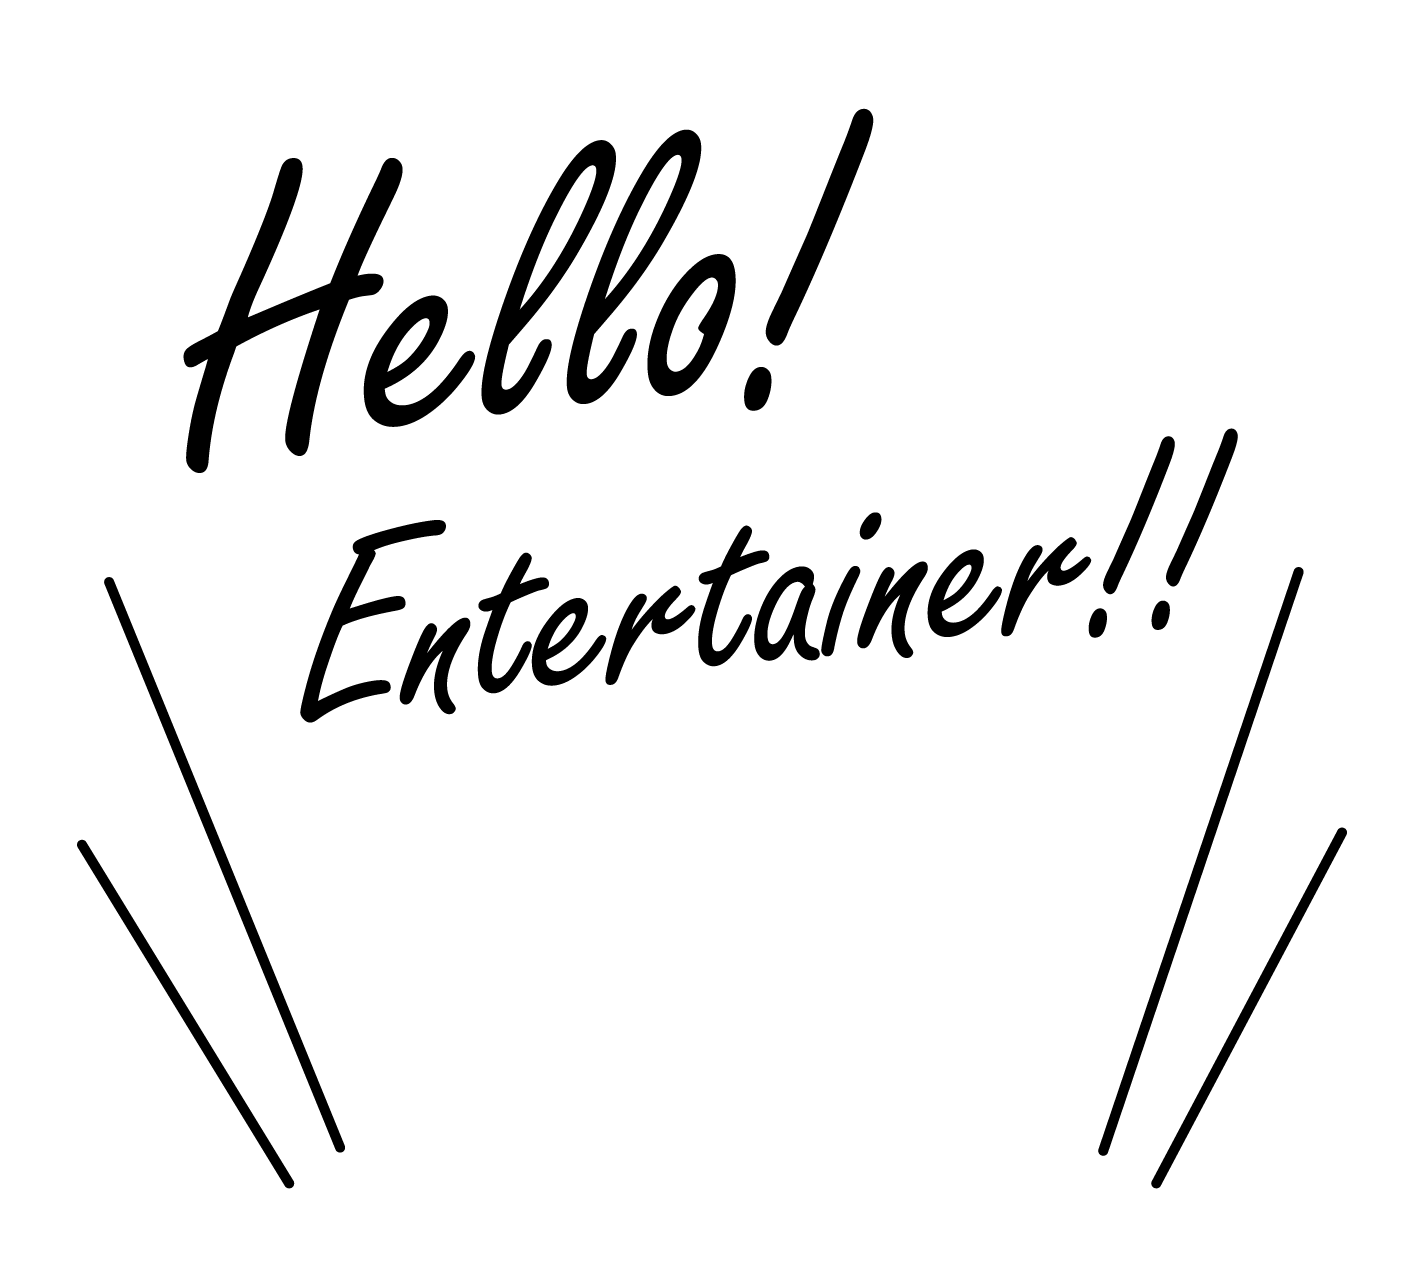 Hello! Entertainer!!